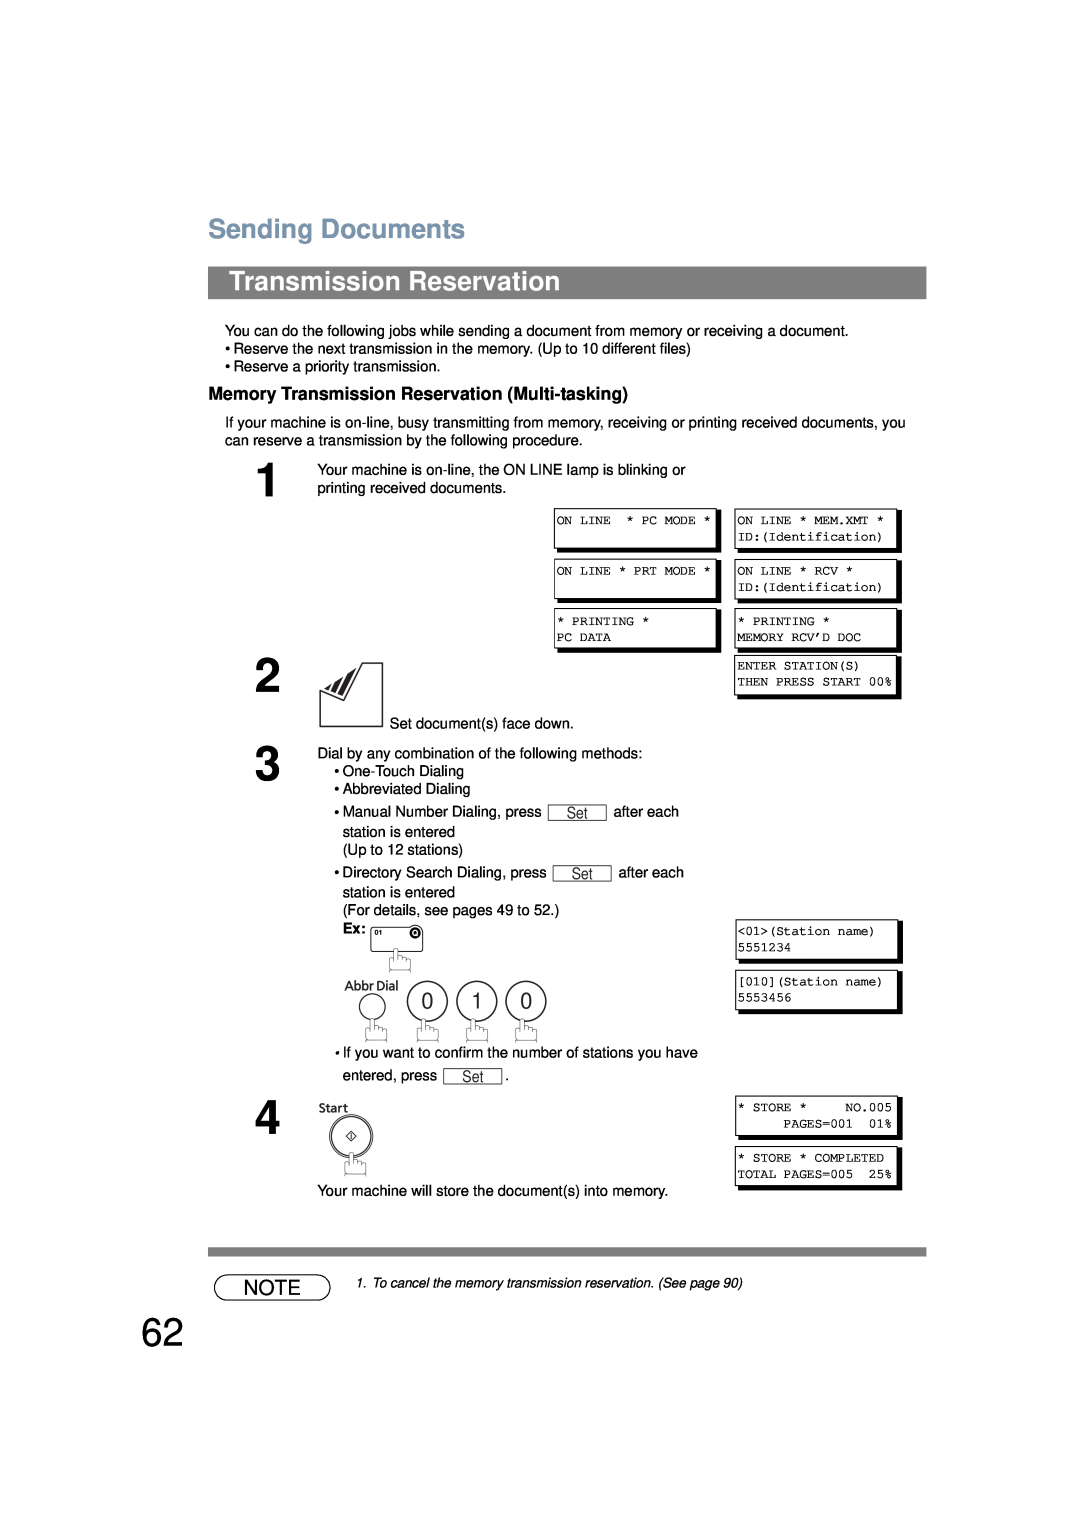 Panasonic UF-6200 operating instructions Sending Documents, Memory Transmission Reservation Multi-tasking 